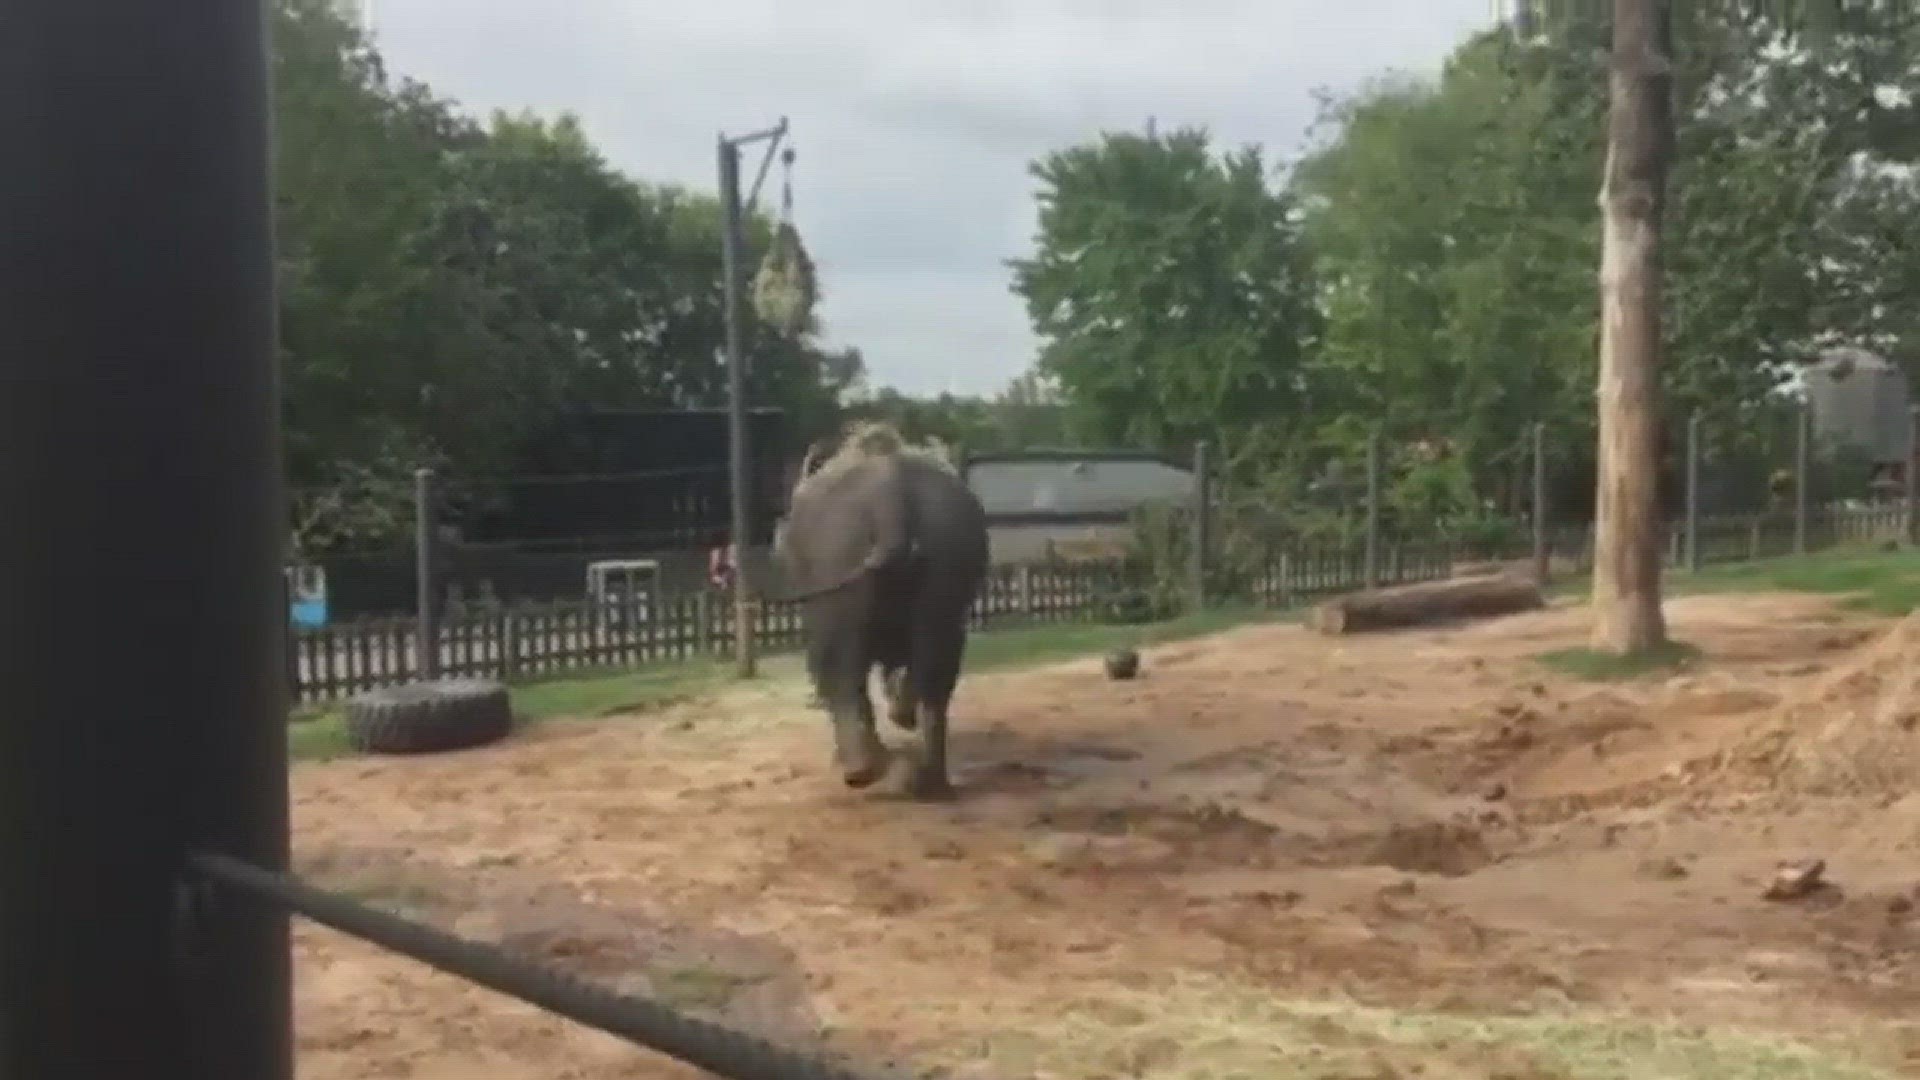 Little Rock Zoo's elephants playfully push around a soccer ball.